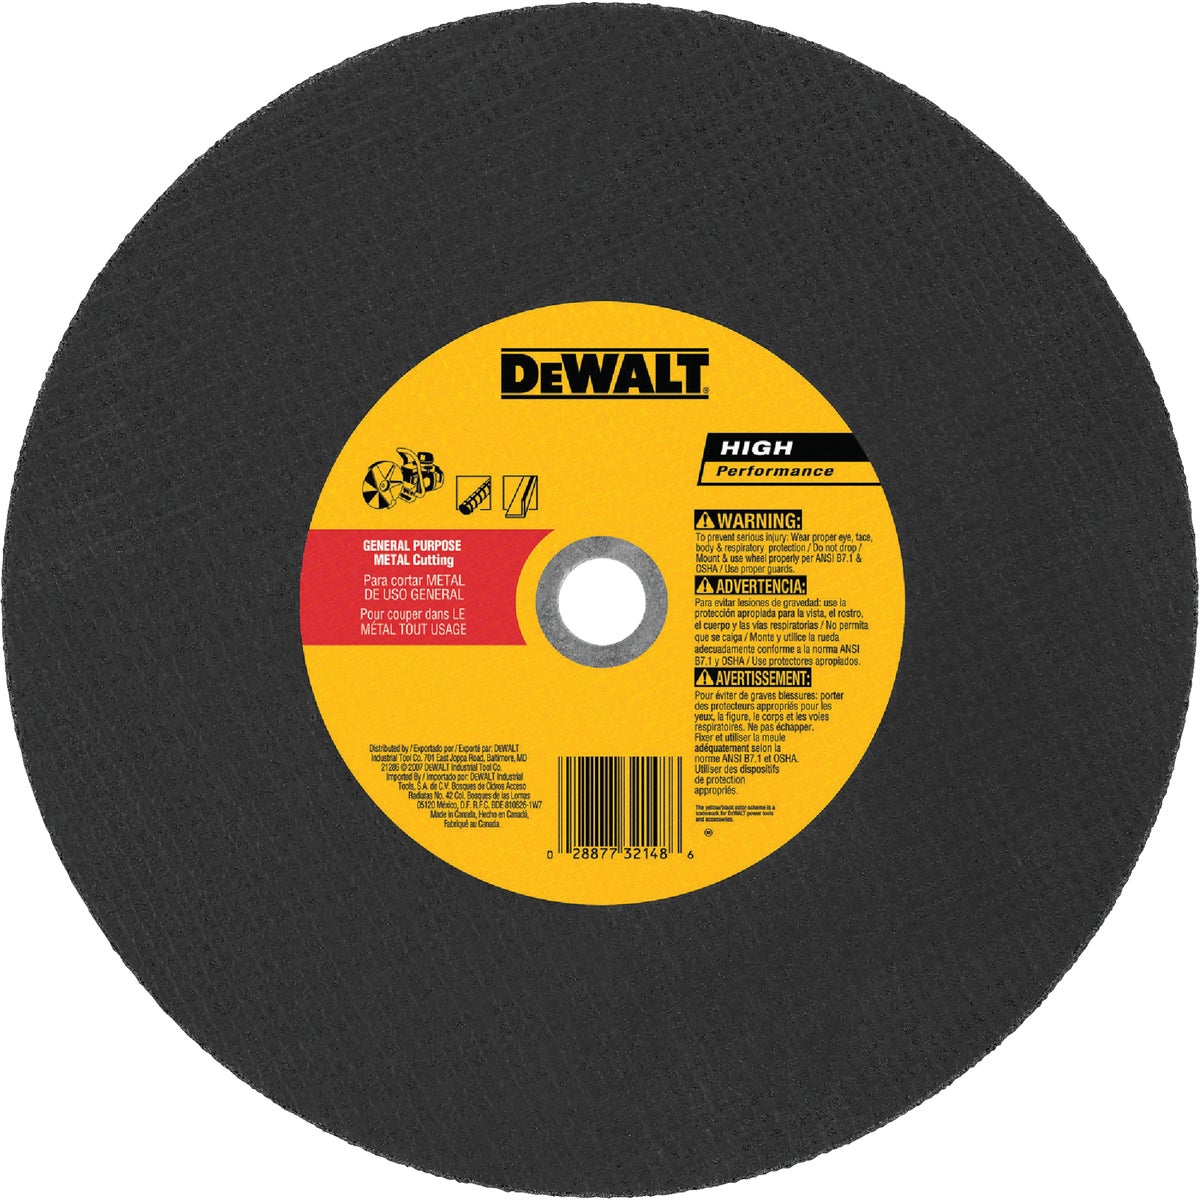 DEWALT HP Type 1 14 In. 1x /8 In. x 20 mm Metal Cut-Off Wheel